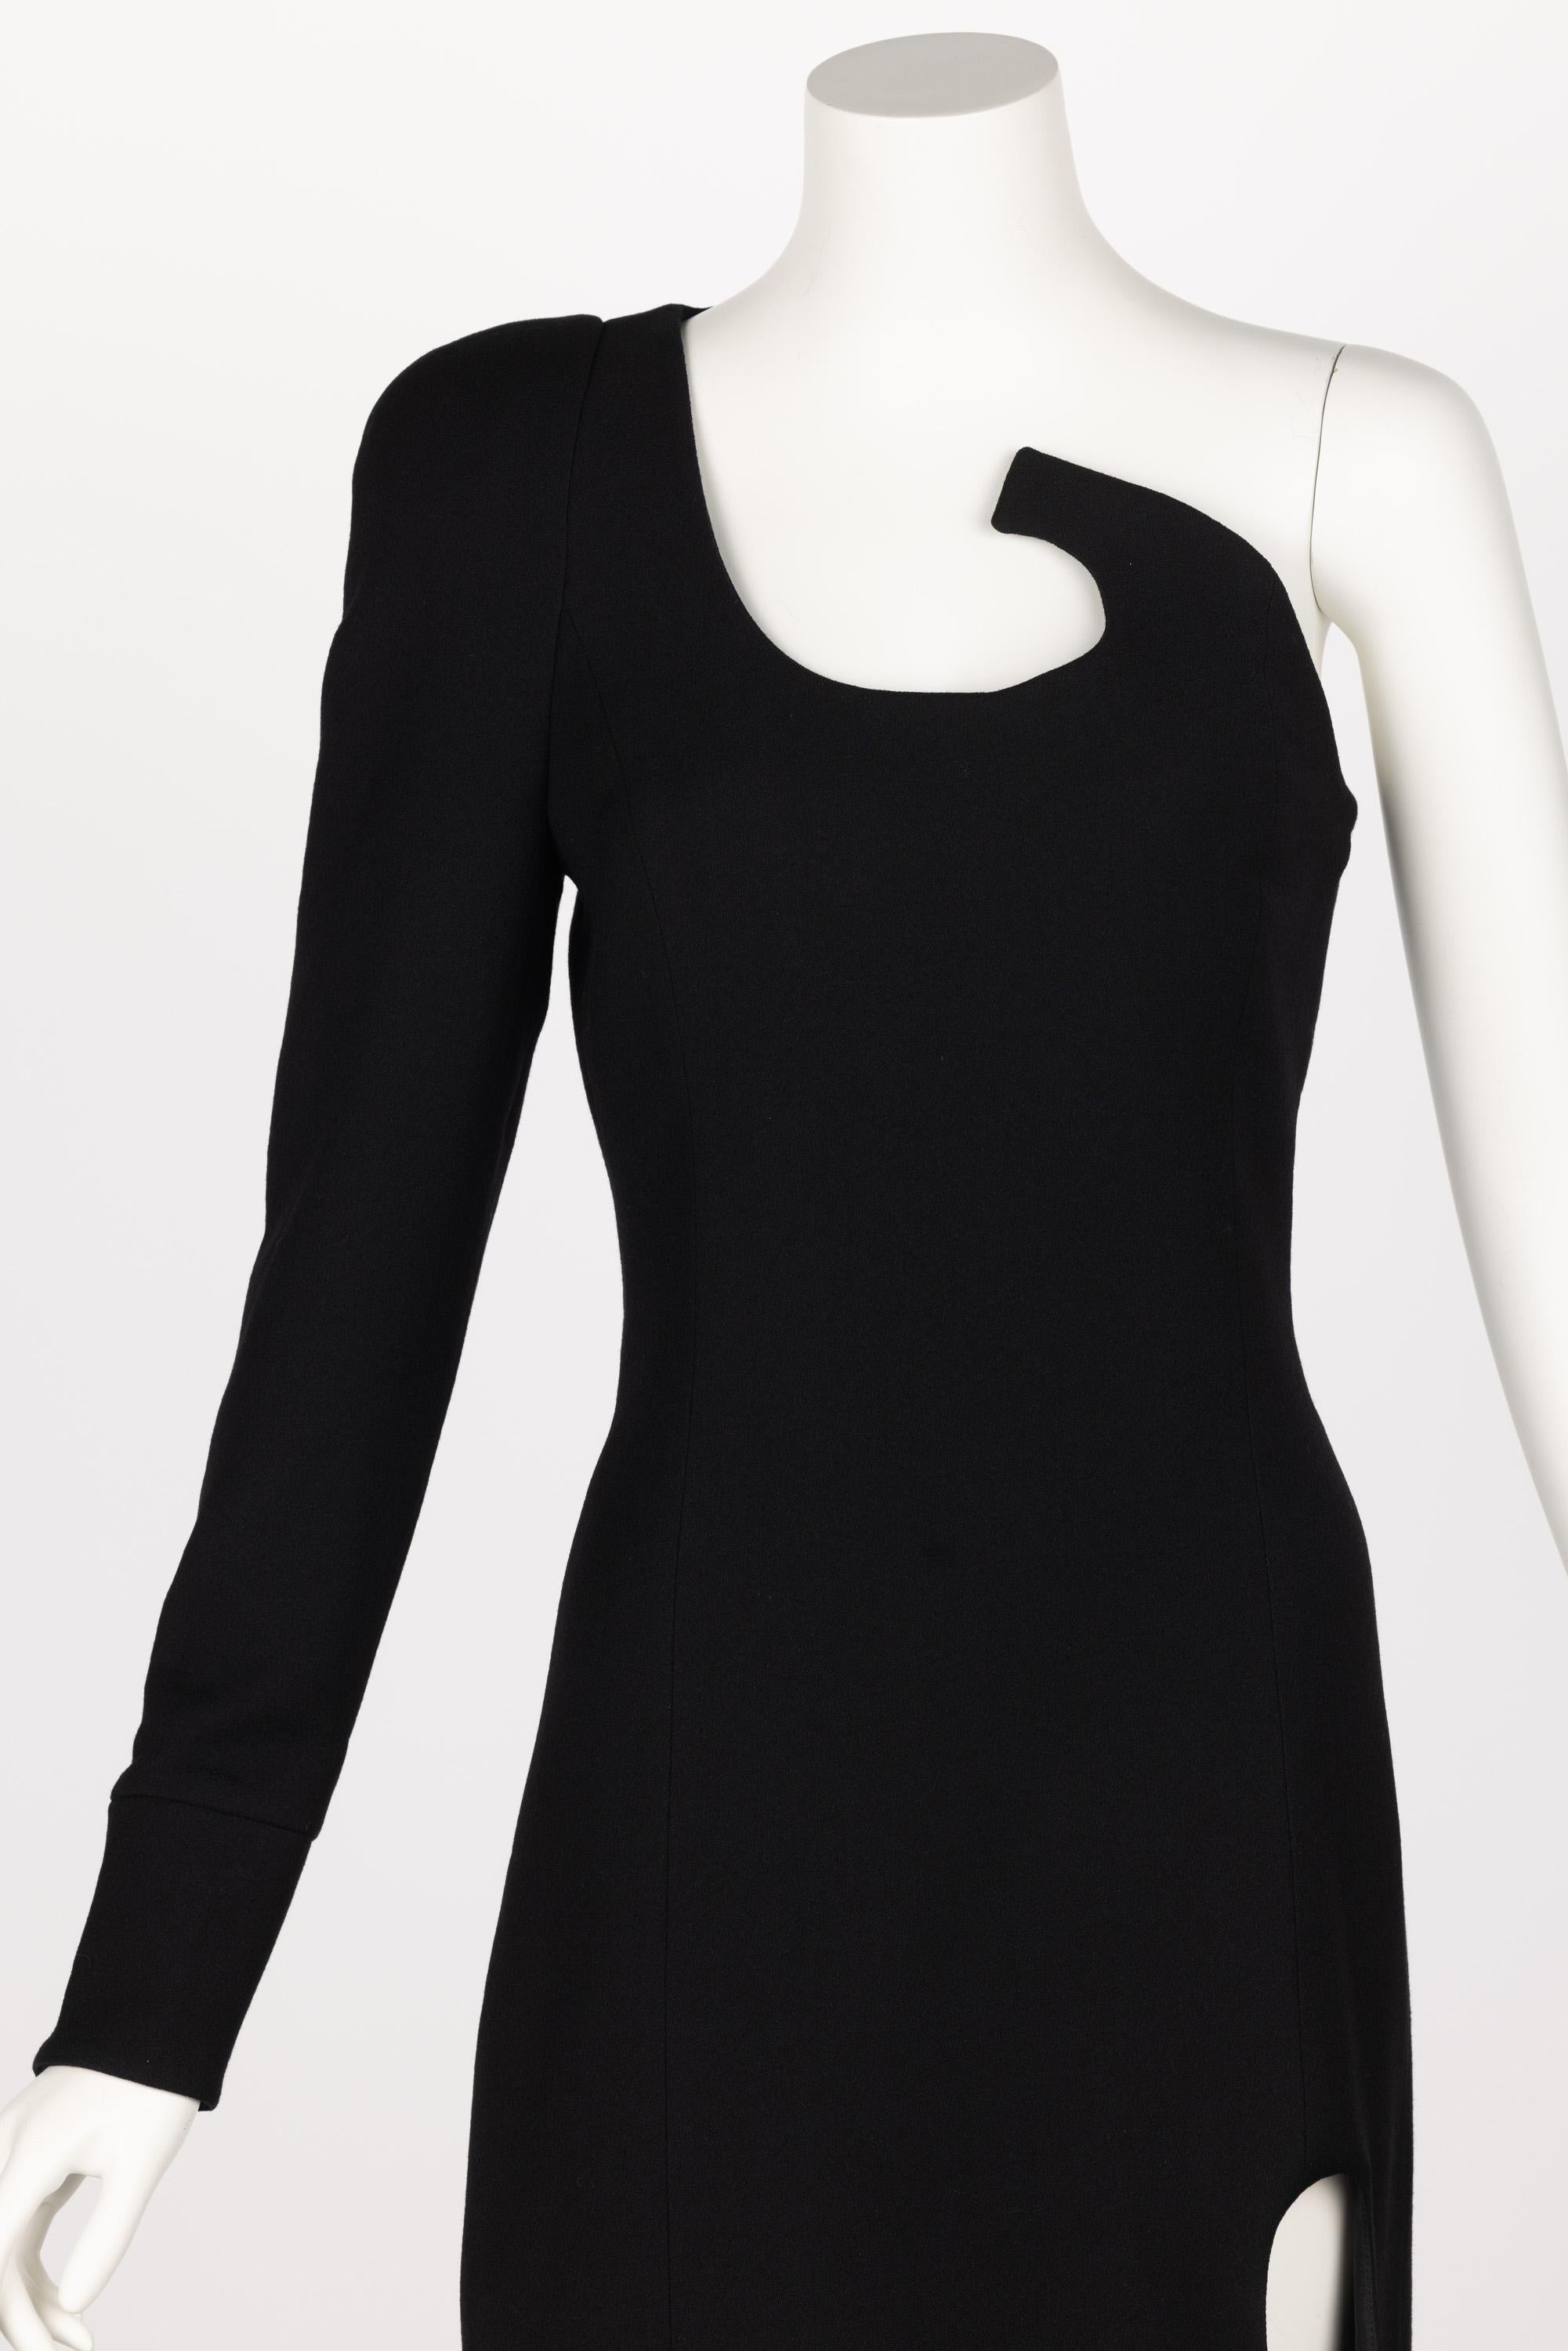 Ronald van der Kemp Demi Couture Fall 2018 Sculptural Black Dress  For Sale 2